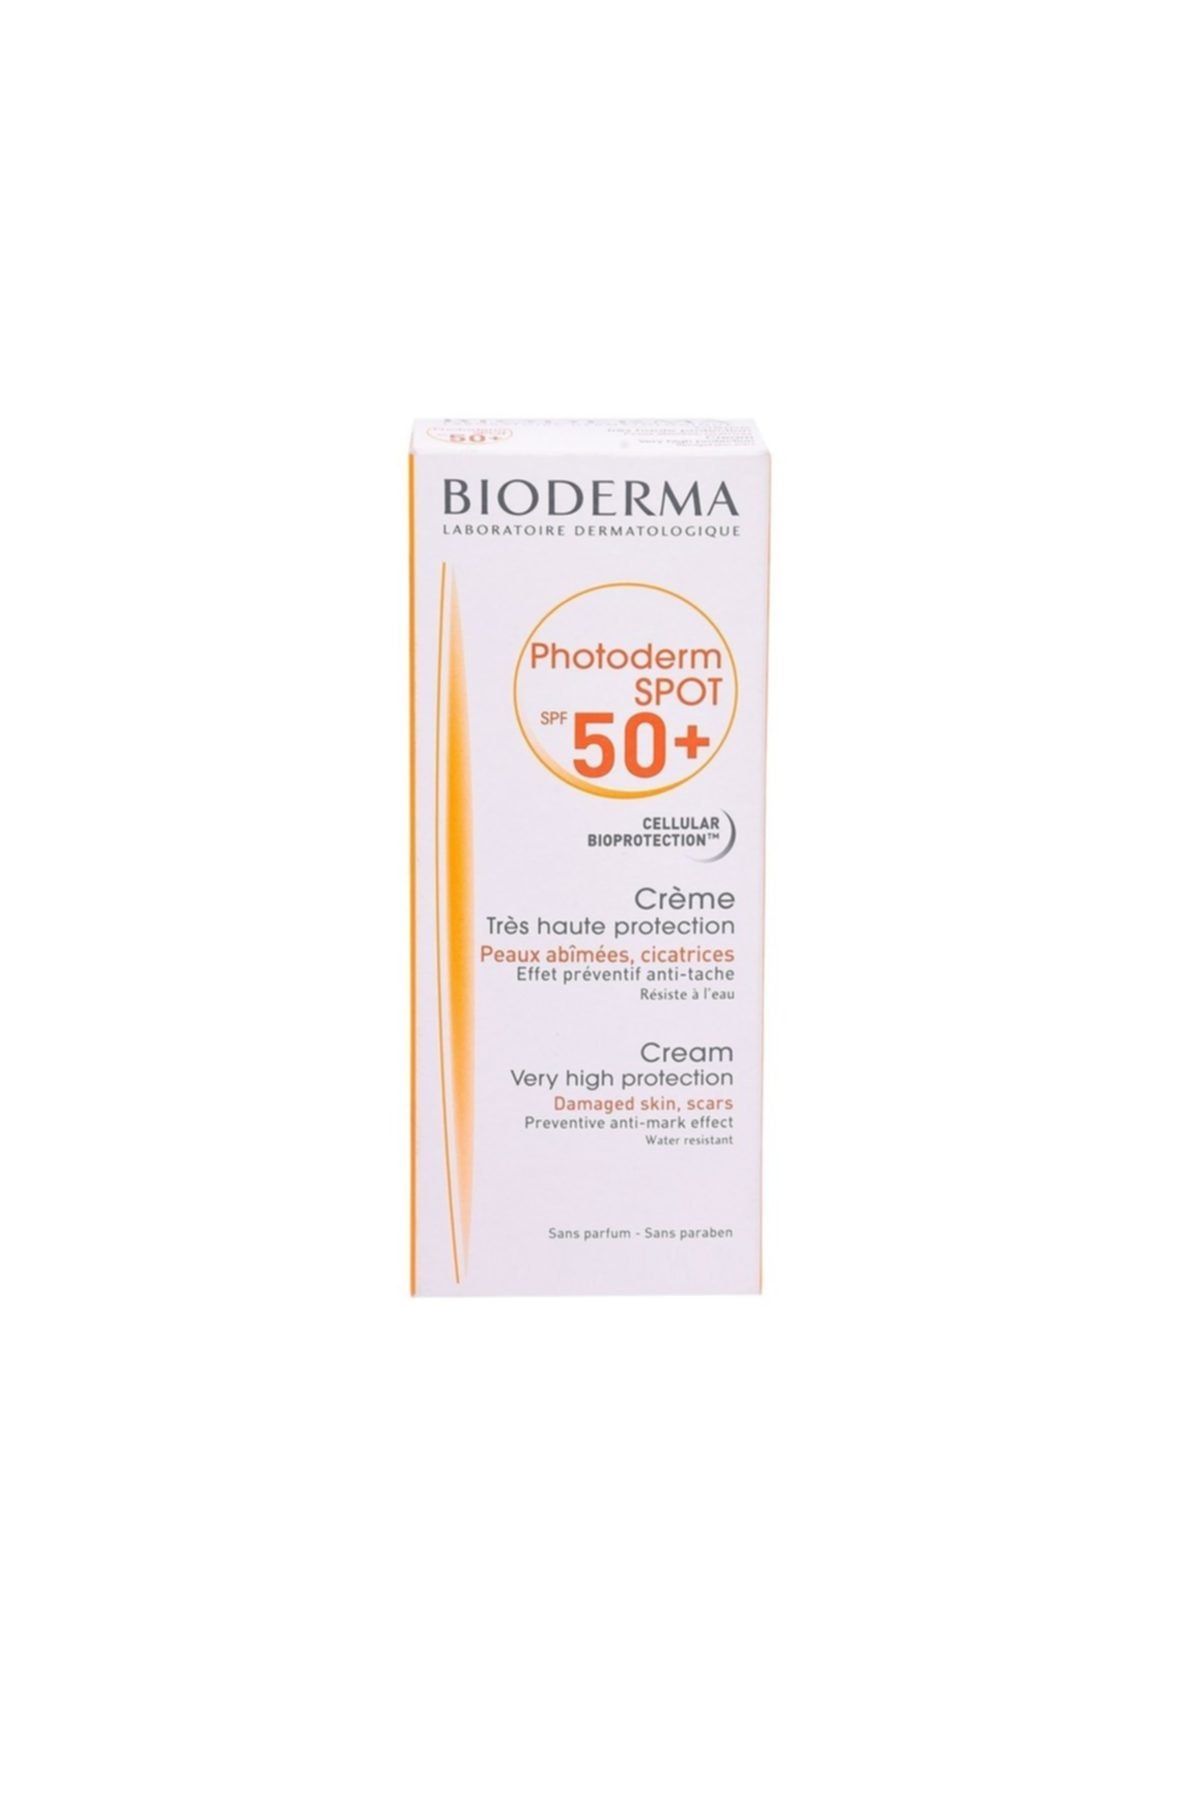 Bioderma Photoderm Spot Spf50+ 150 ml P20627S1860